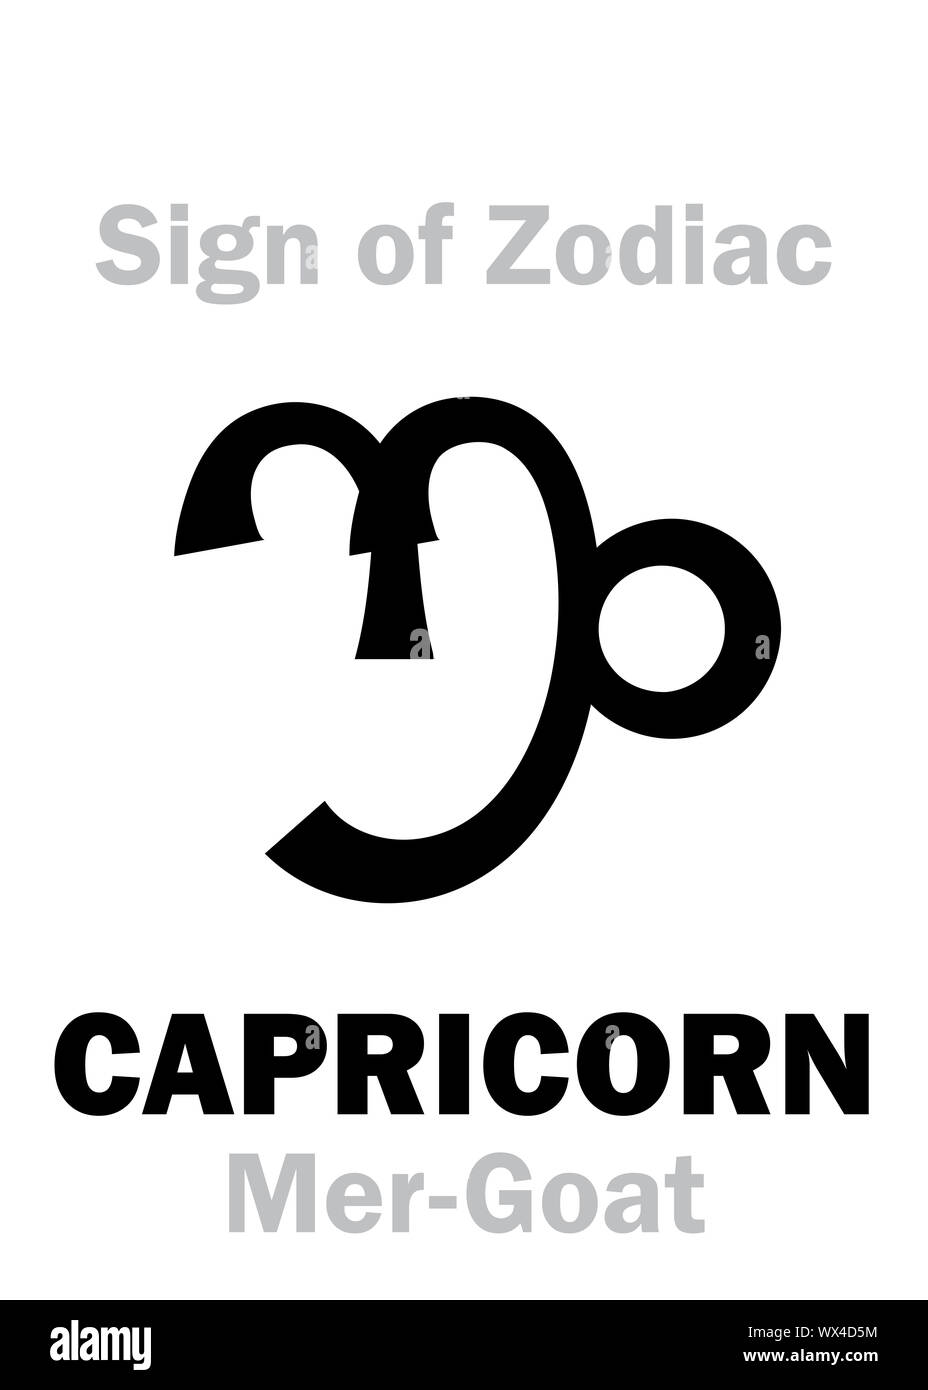 Astrology: Sign of Zodiac CAPRICORNUS (The Mer-Goat) Stock Photo